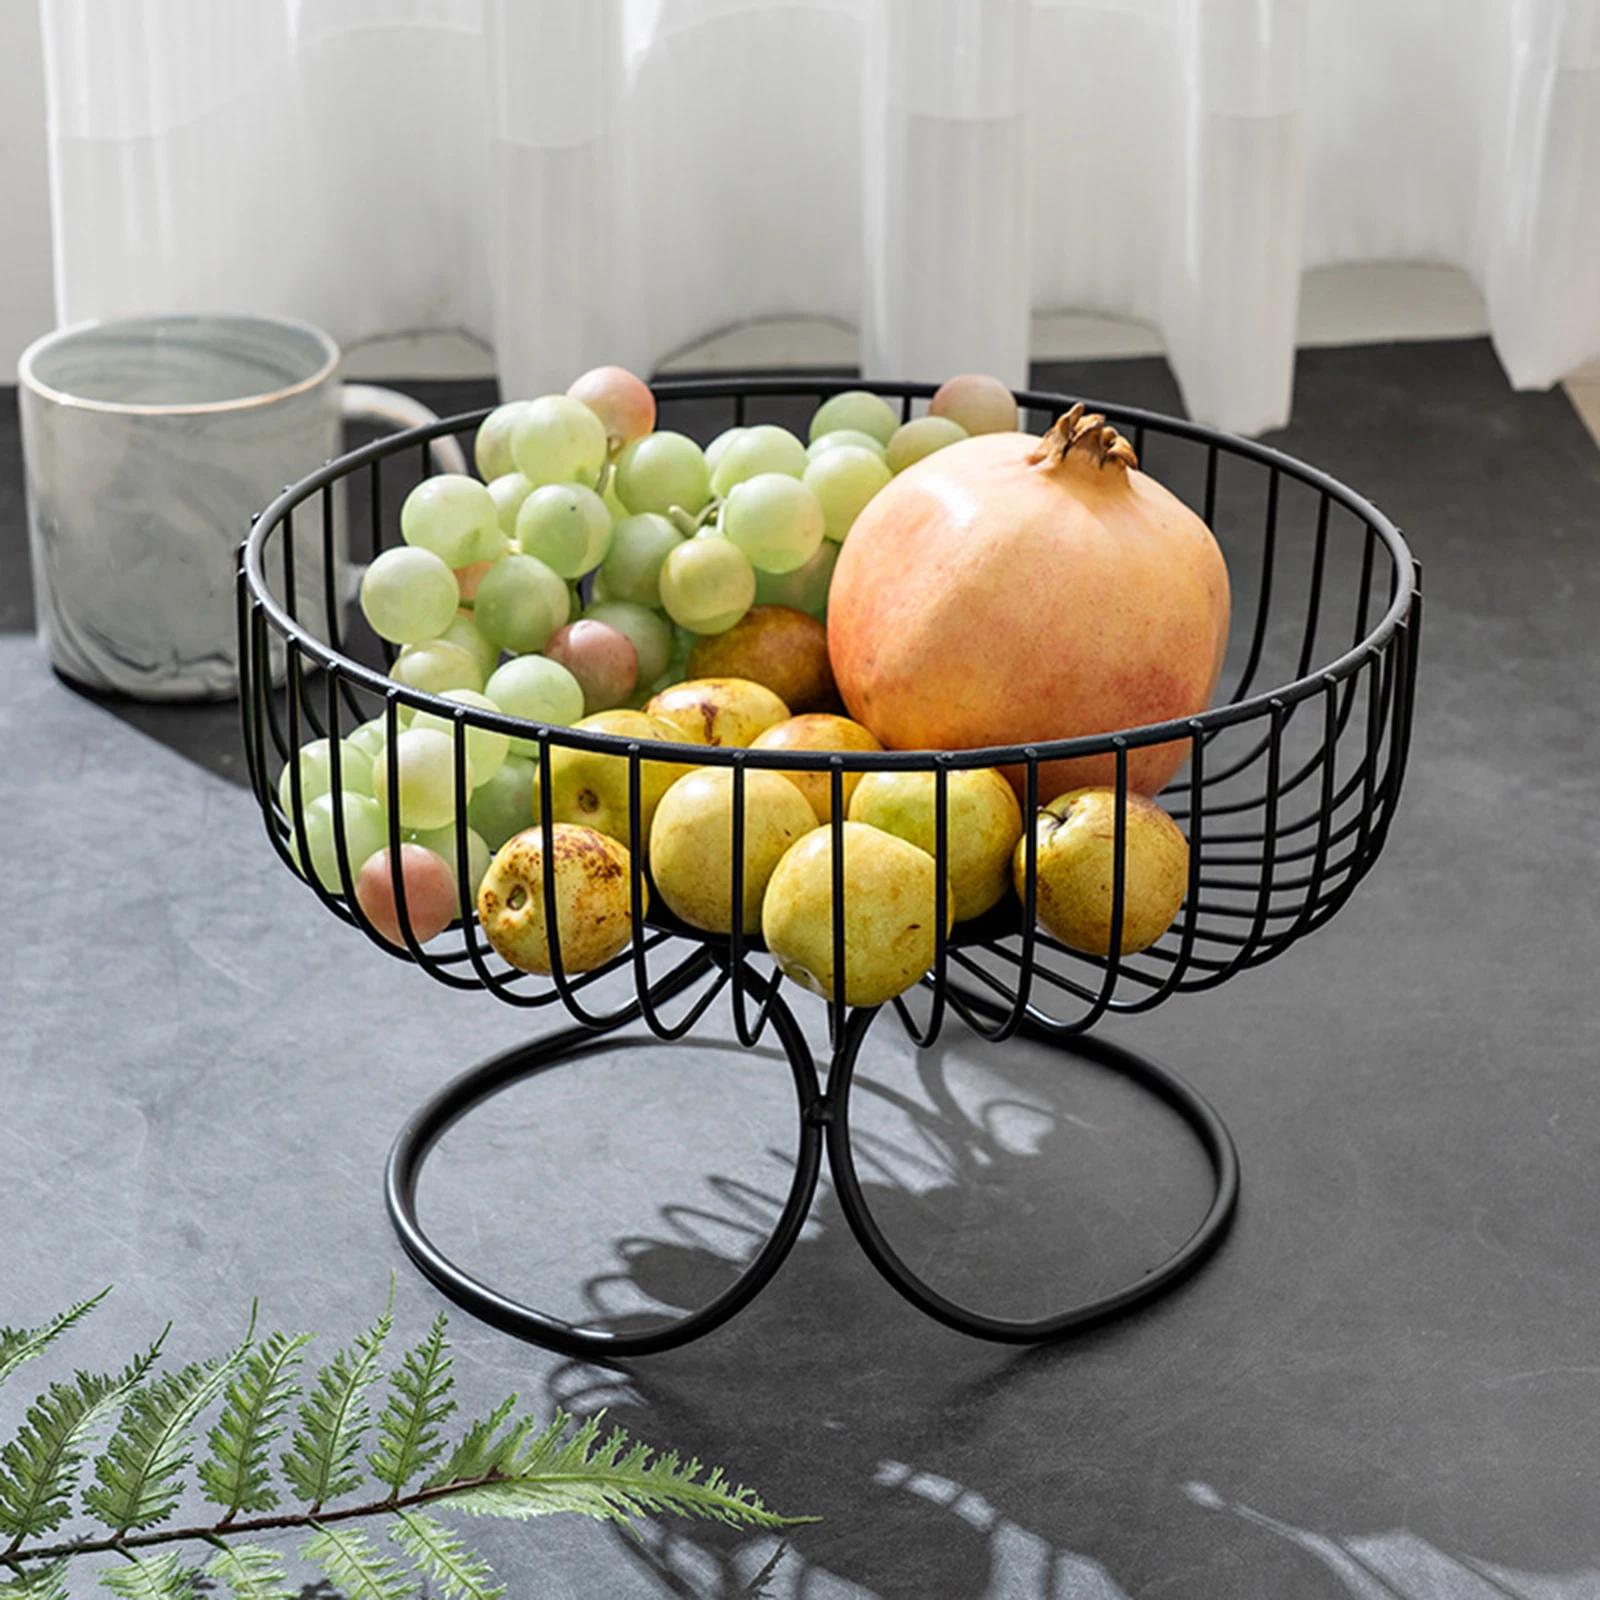 https://ae01.alicdn.com/kf/S1d37085ff691440e877e23b1f26676790/Modern-Metal-Wire-Fruit-Basket-European-Style-for-Countertop-Wedding-Bread-Fruit-Bowl-Basket-Holder-Snacks.jpg